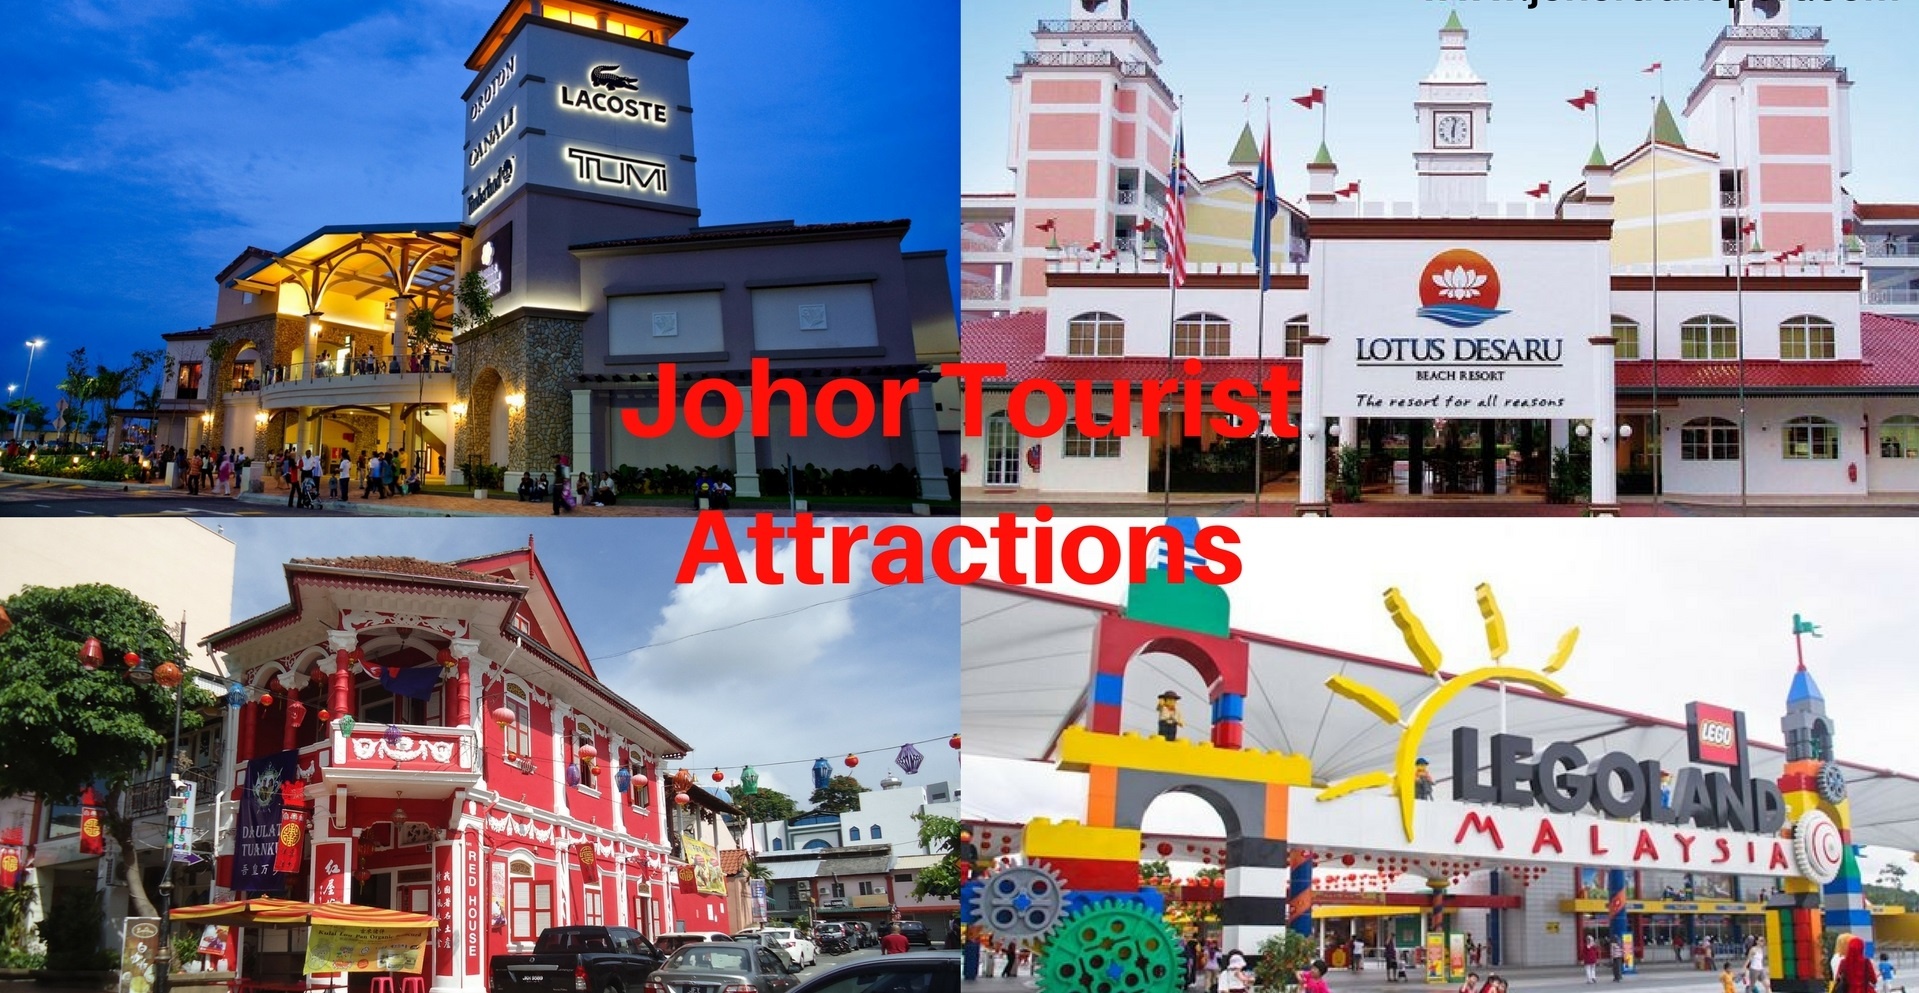 Johor Tourist Attractions Bukit Brown   MRT station